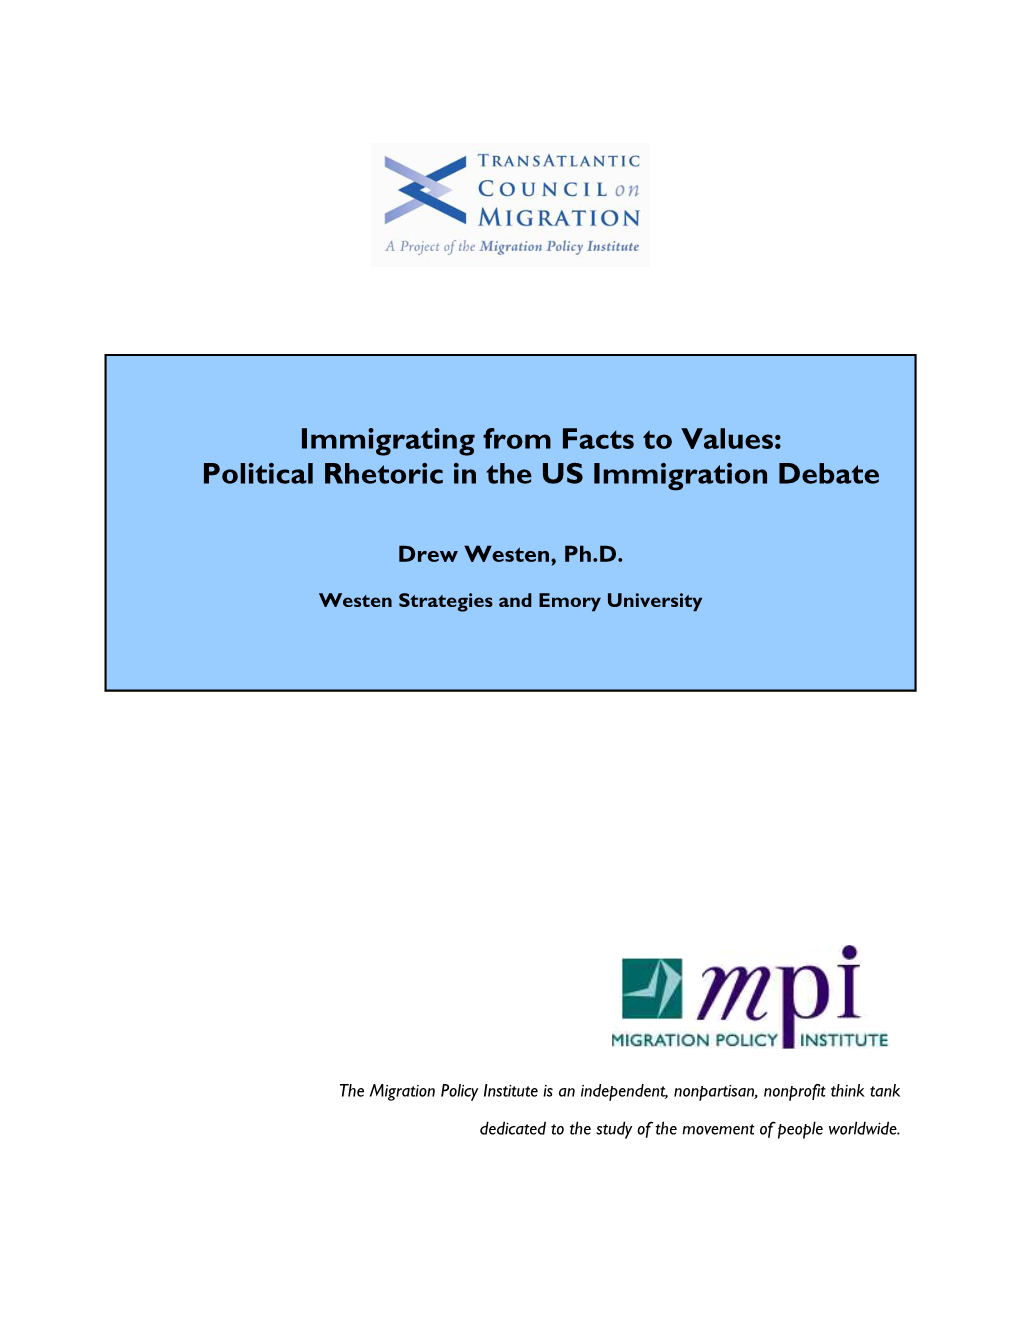 Political Rhetoric in the US Immigration Debate